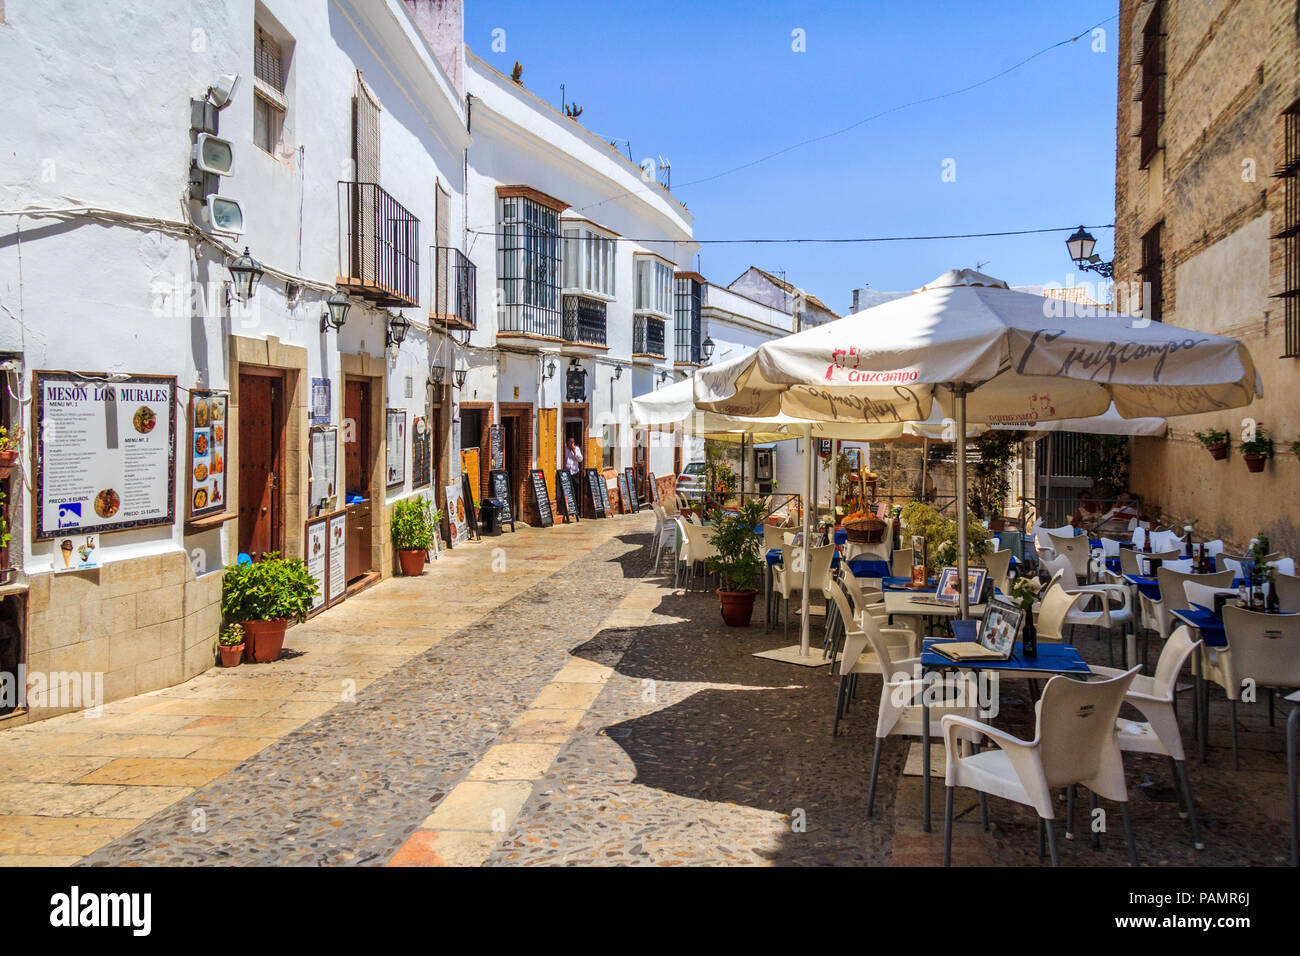 Arcos de la Frontera, Spain - 22nd June 2018: Restaurants with outdoor seating. Al fresco dining is very popular in Spain. Stock Photo